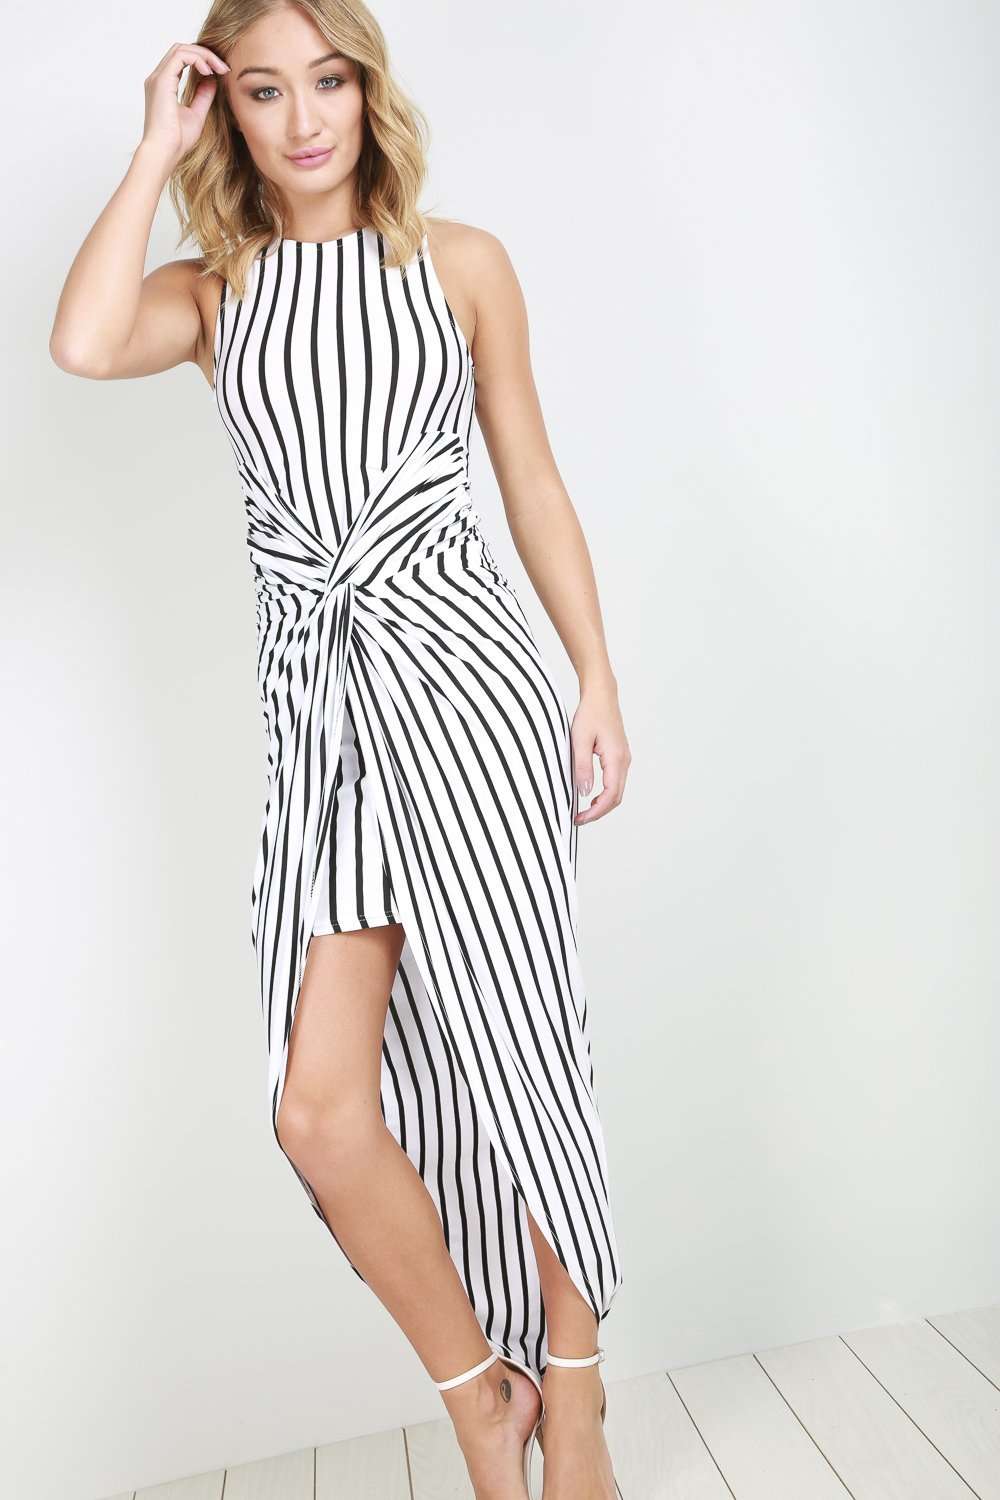 Sleeveless Monochrome Striped Twisted Maxi Dress - bejealous-com